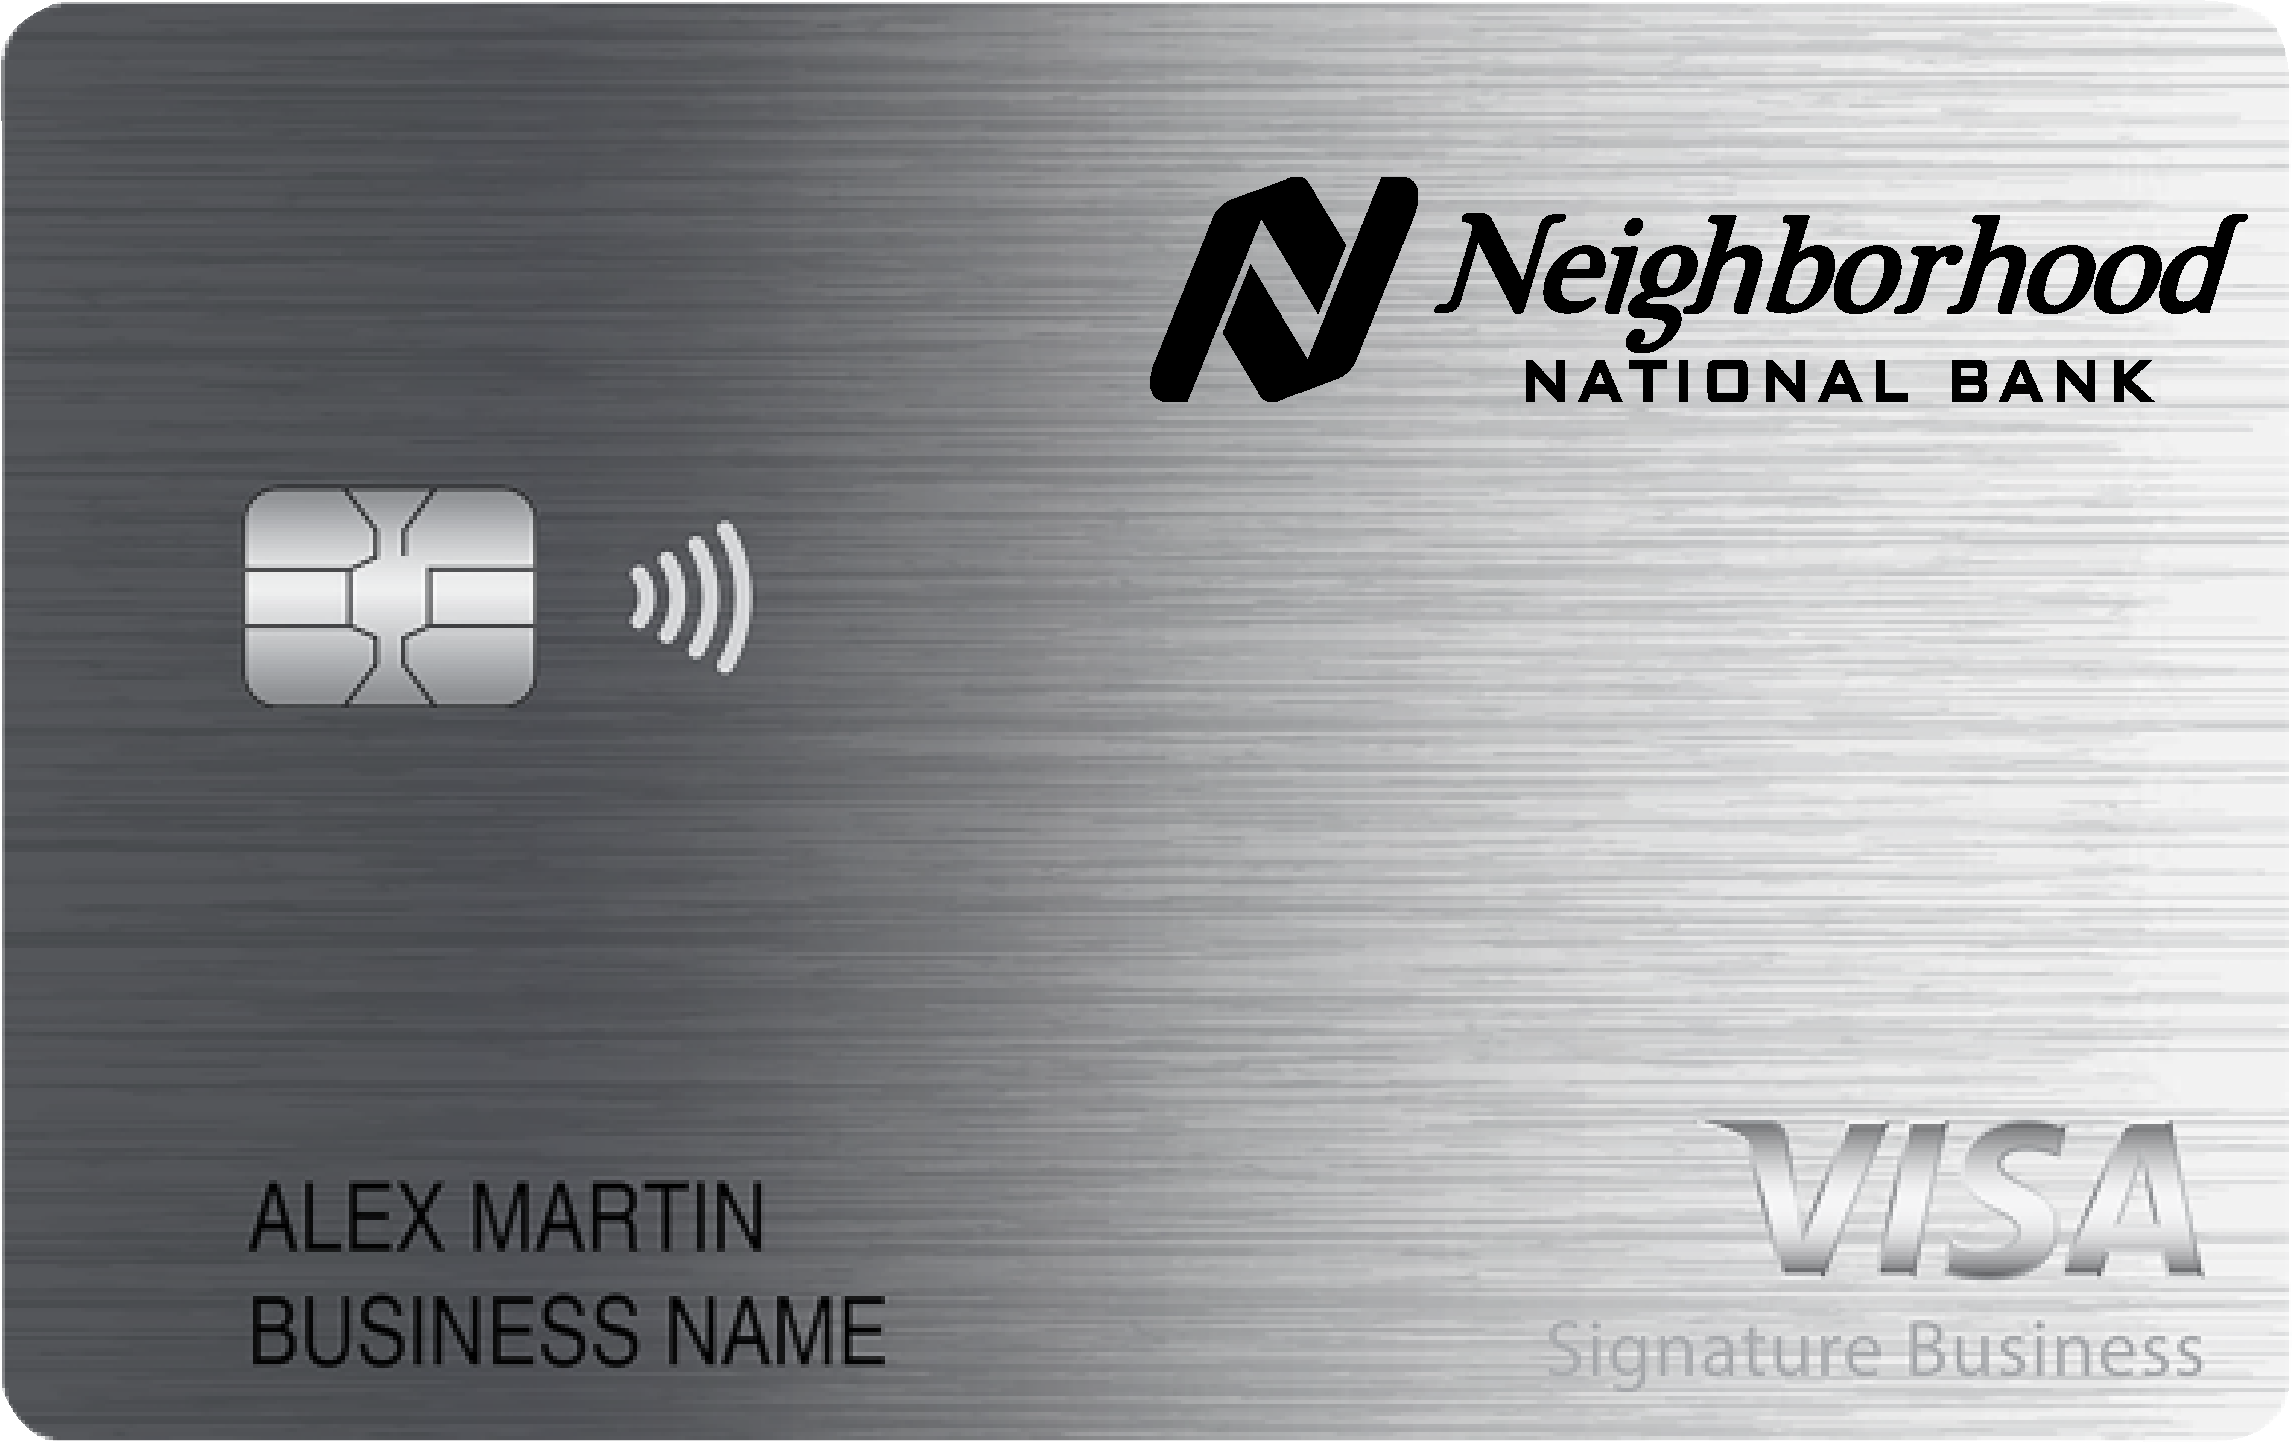 Neighborhood National Bank Smart Business Rewards Card